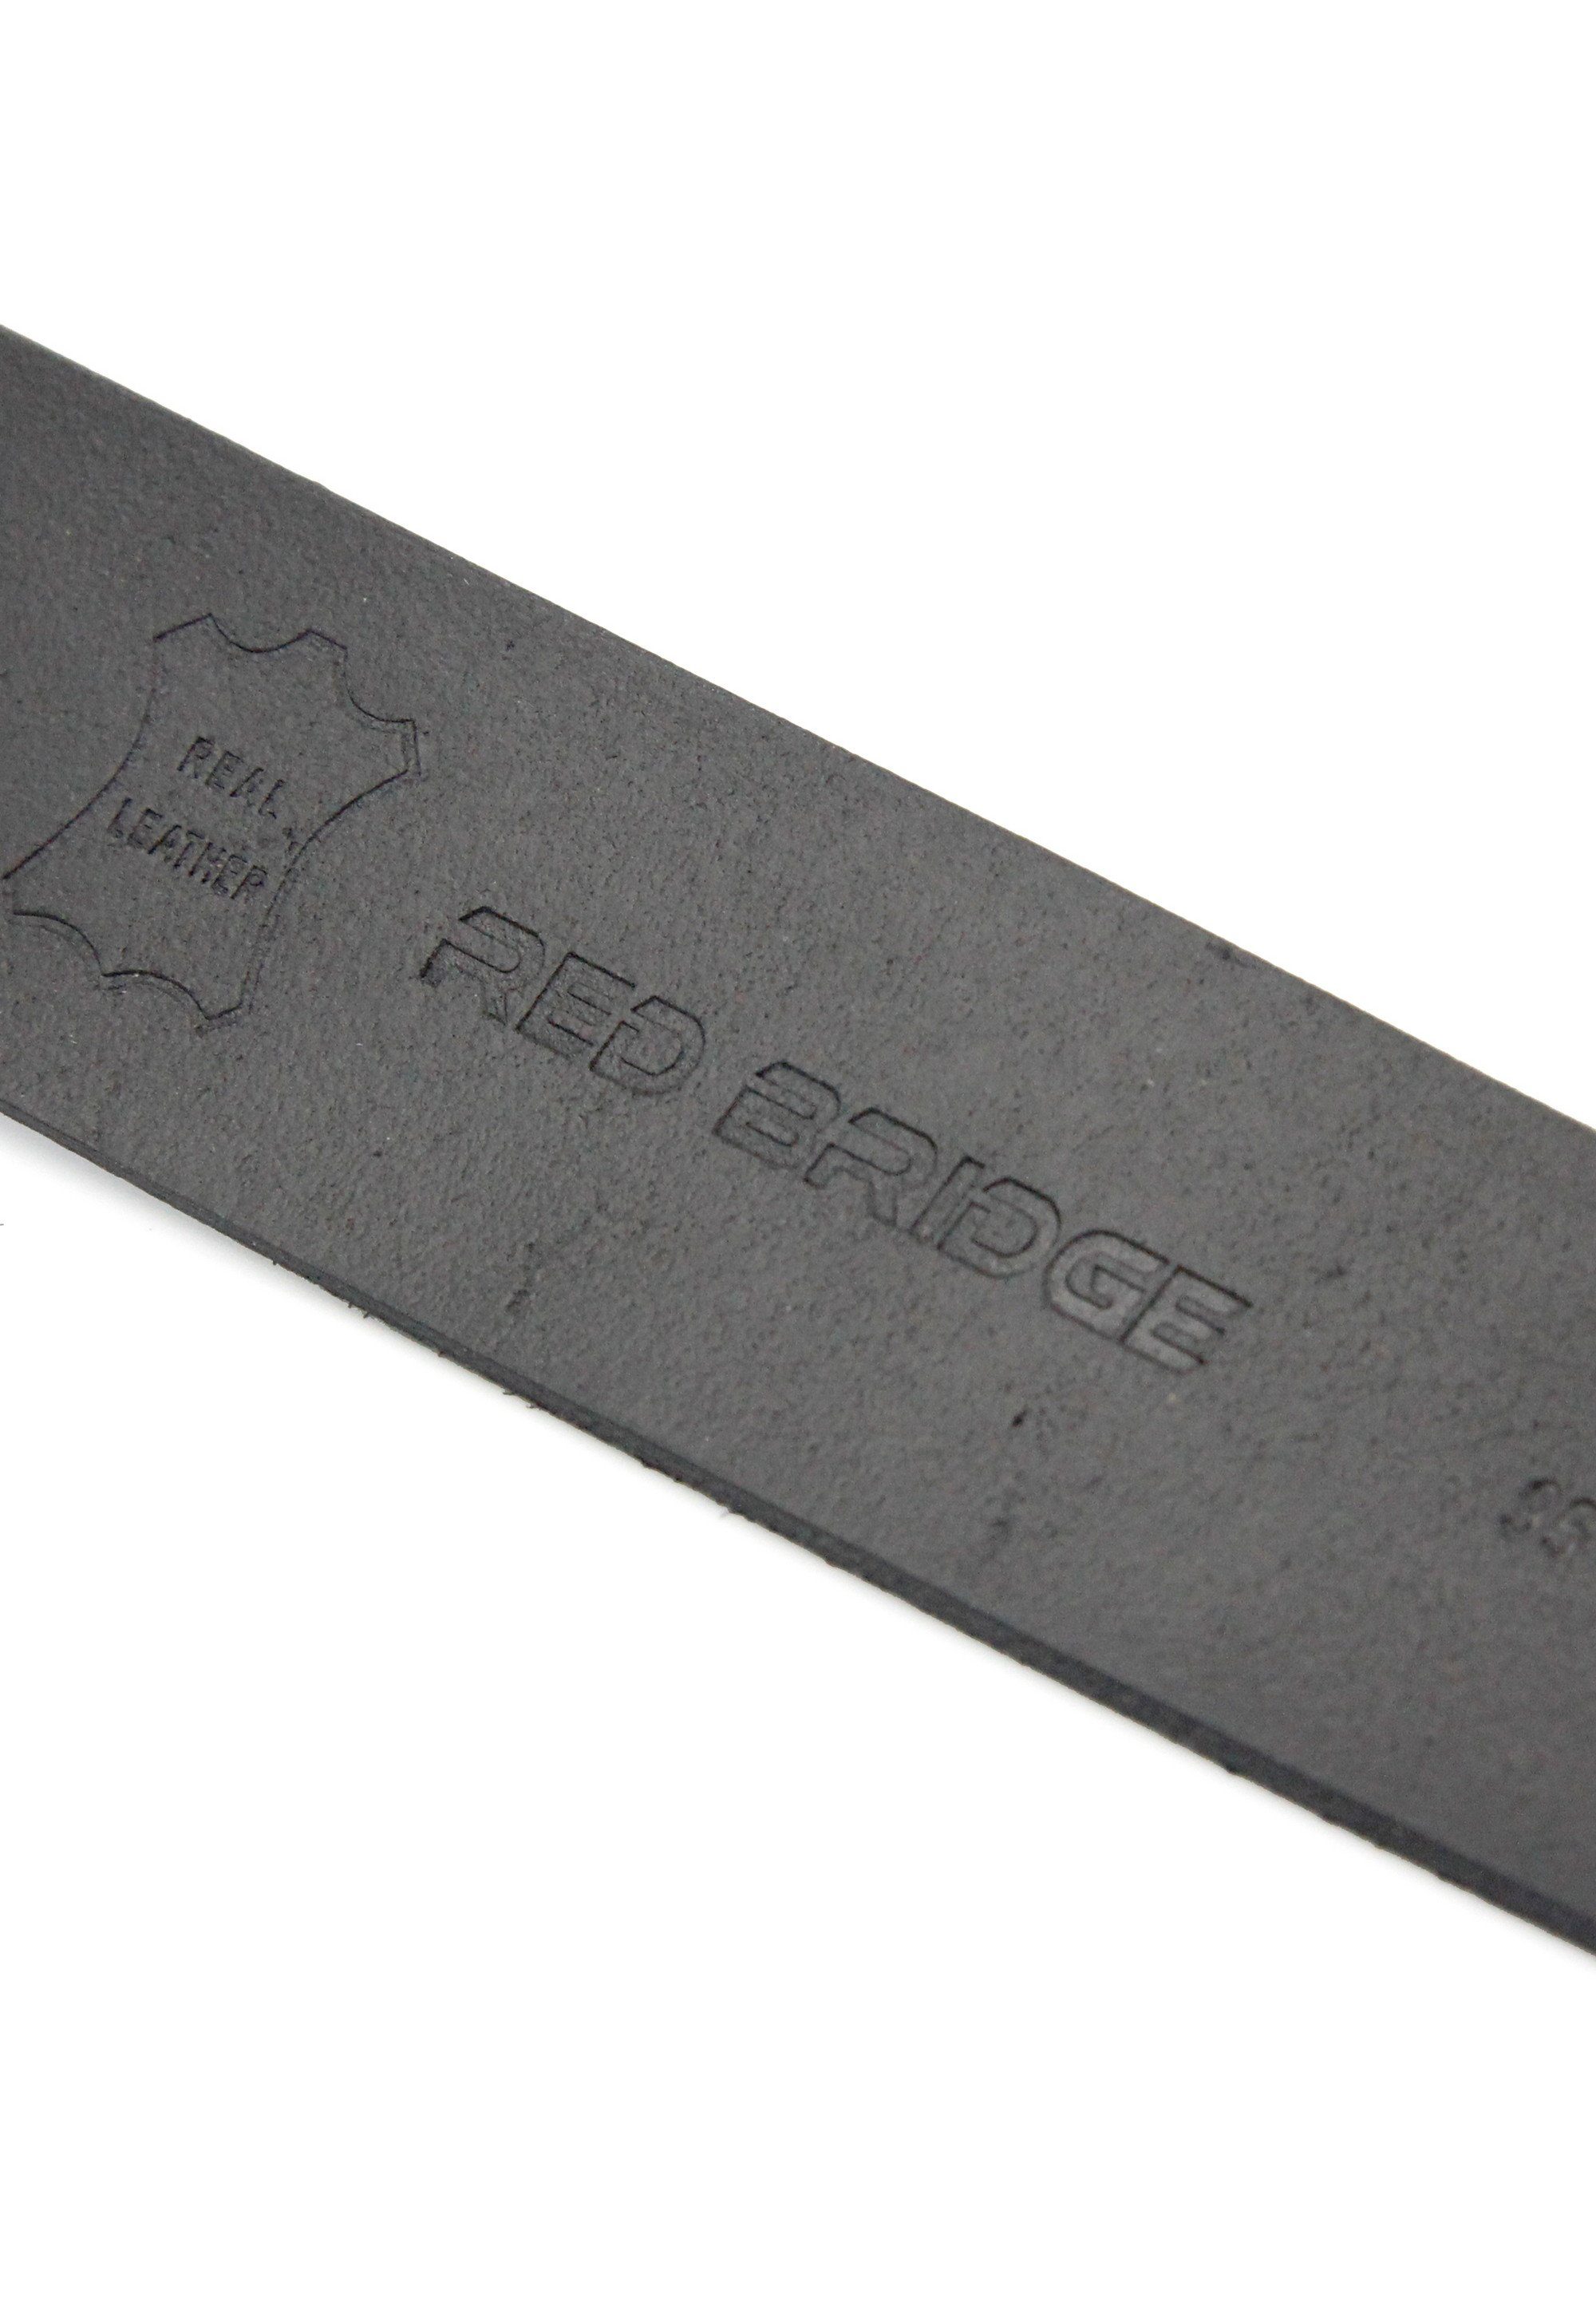 RedBridge Ledergürtel in Frisco schlichtem dunkelblau Design